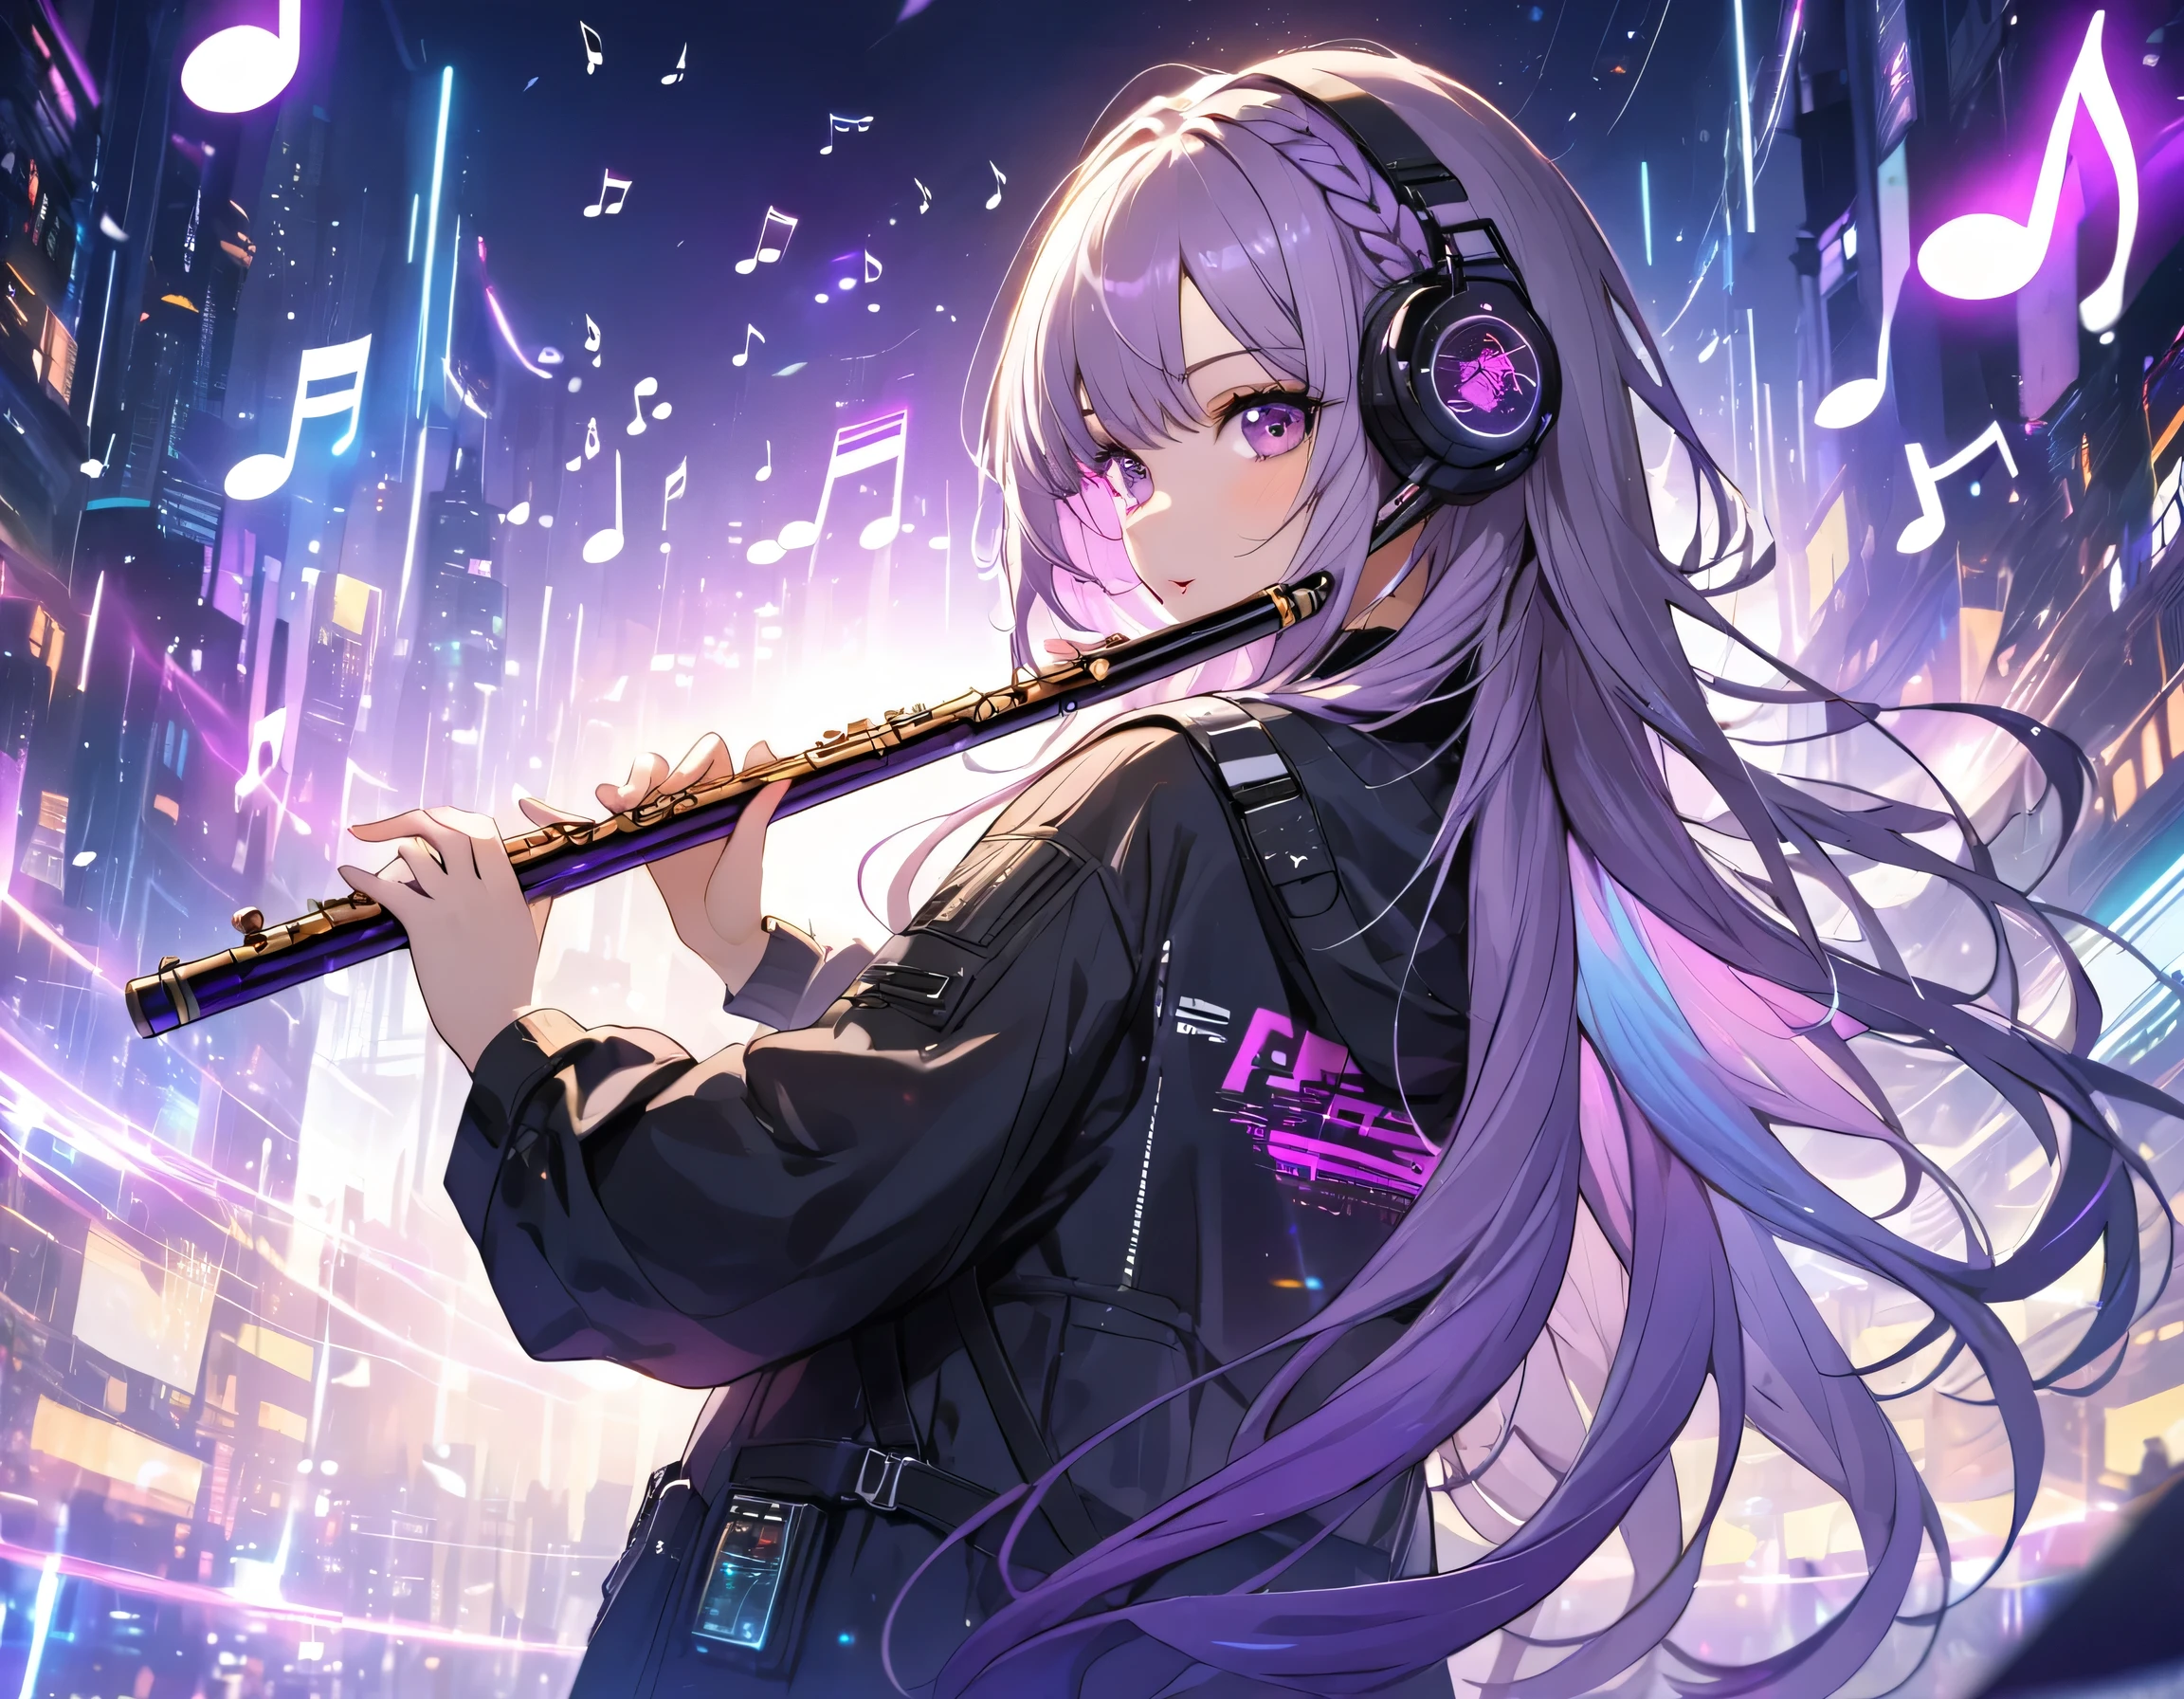 ciberpunk, Luces centelleantes de pelo largo trenzado degradado blanco-púrpura, Una hermosa niña tocando una flauta., Notas musicales a su alrededor, (Notas musicales voladoras:1.4), (desde atrás:1.3), mirando a la camara